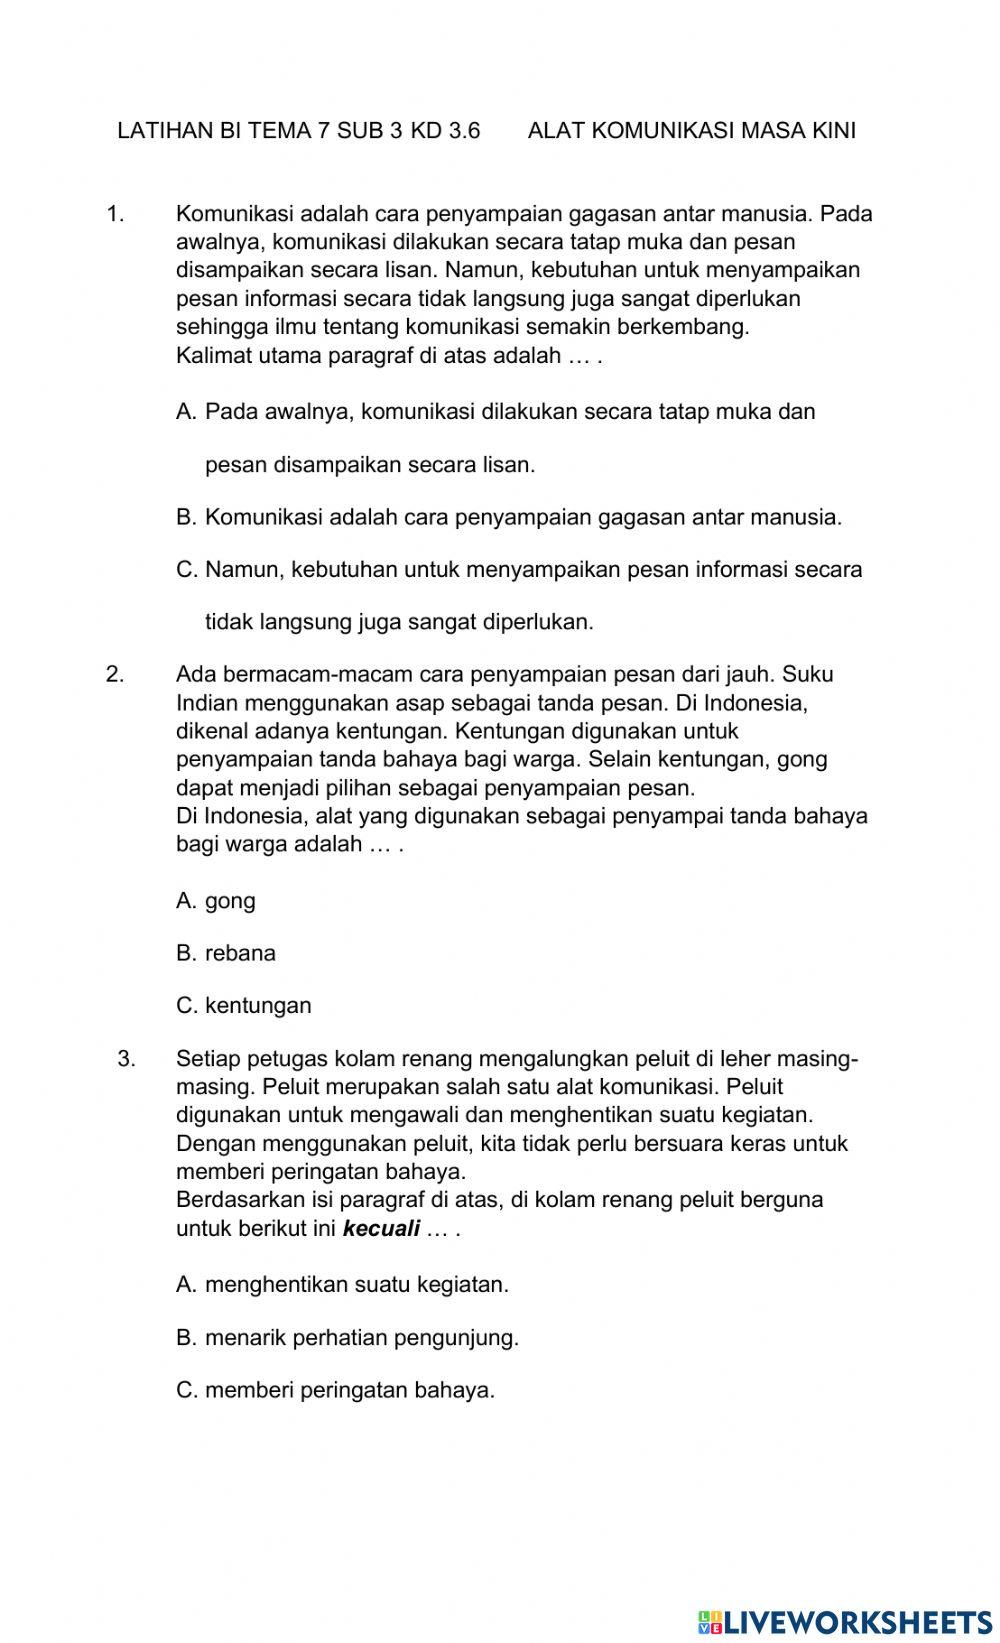 Latihan bahasa indonesia t7 st3